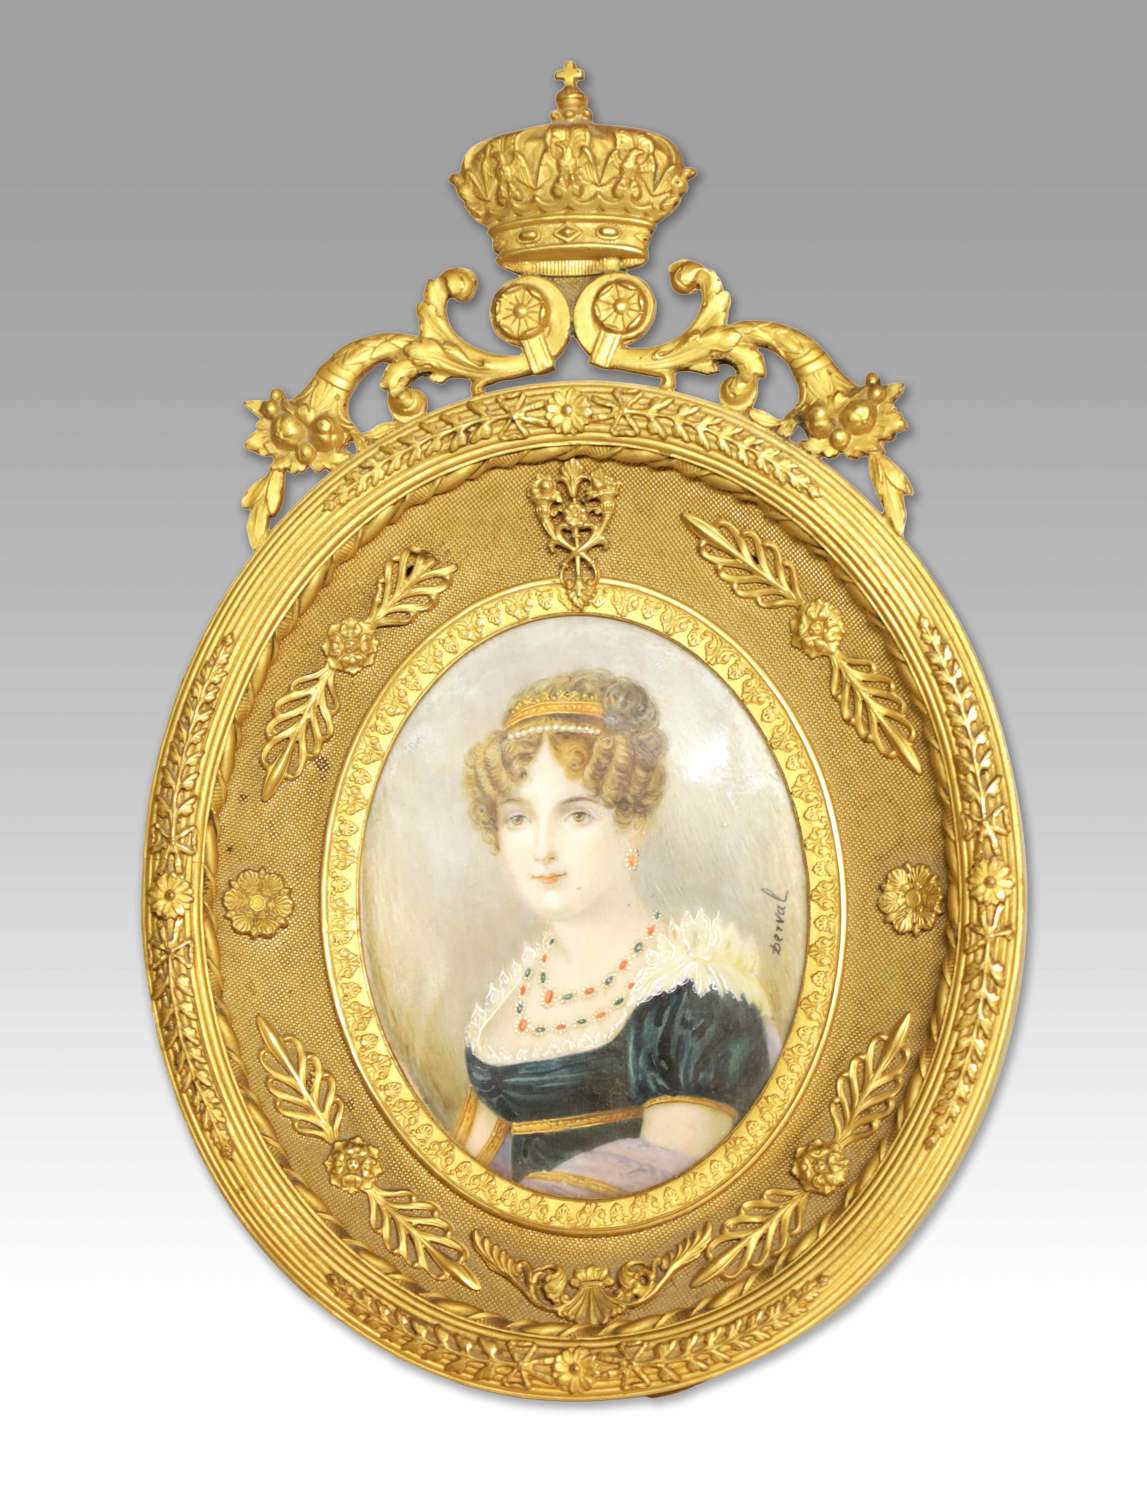 A 19th Century Ornate Ormolu Framed Portrait Miniature by Jean Derval